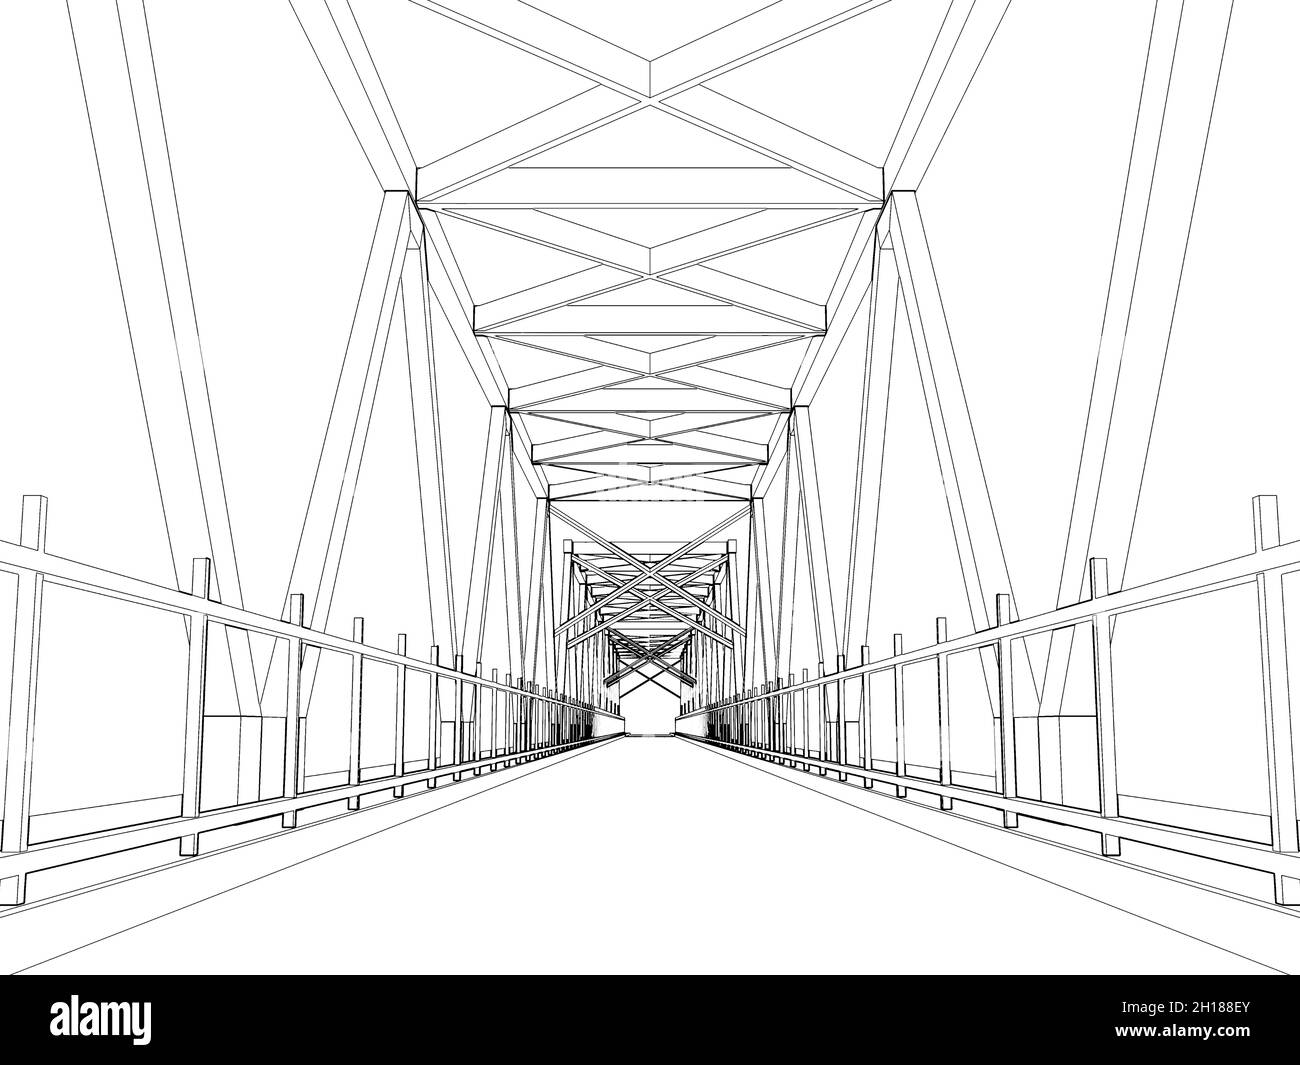 Truss bridge model perspective view. Outline frame model over white background, 3d rendering illustration Stock Photo